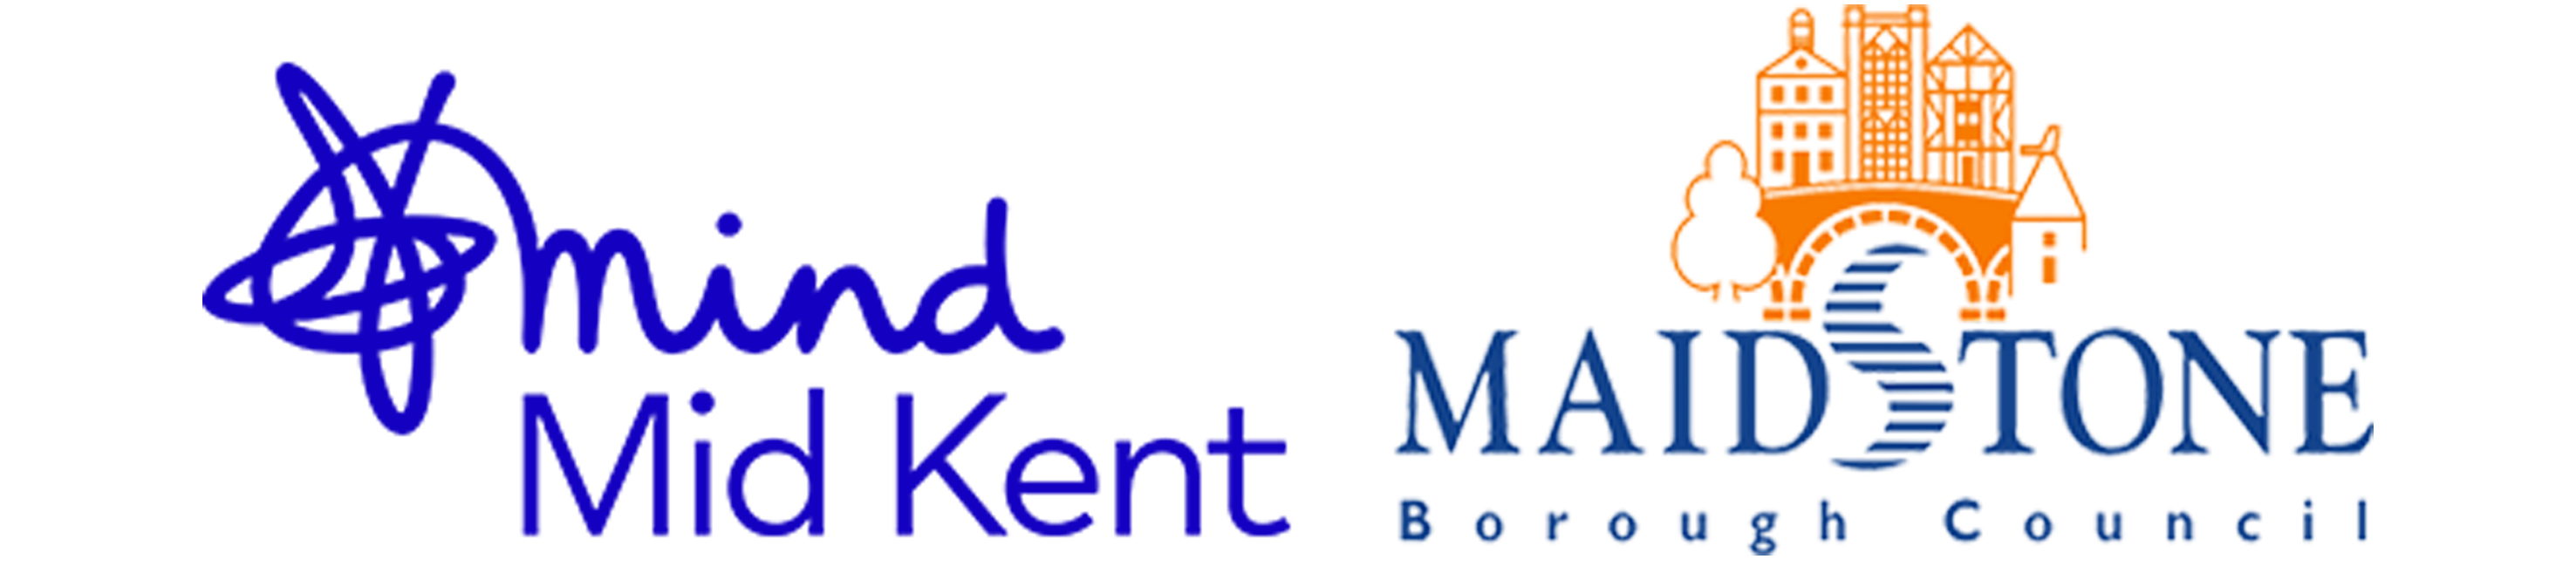 Mid Kent Mind & Maidstone Borough Council Logo